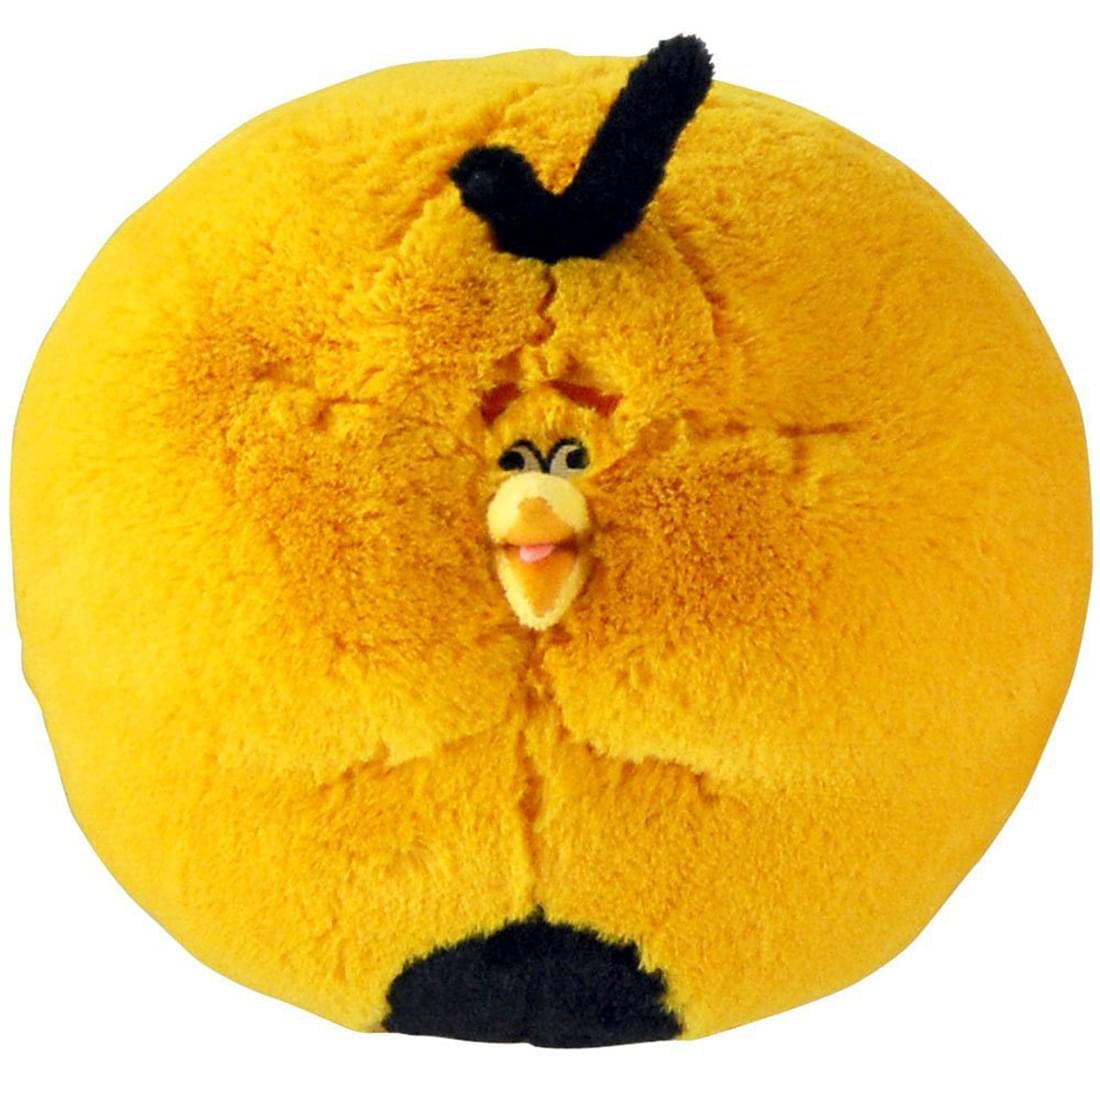 NEW Angry Birds Plush Bubbles Yellow Orange Stuffed Animal Bird Toy 8" w/ SOUND